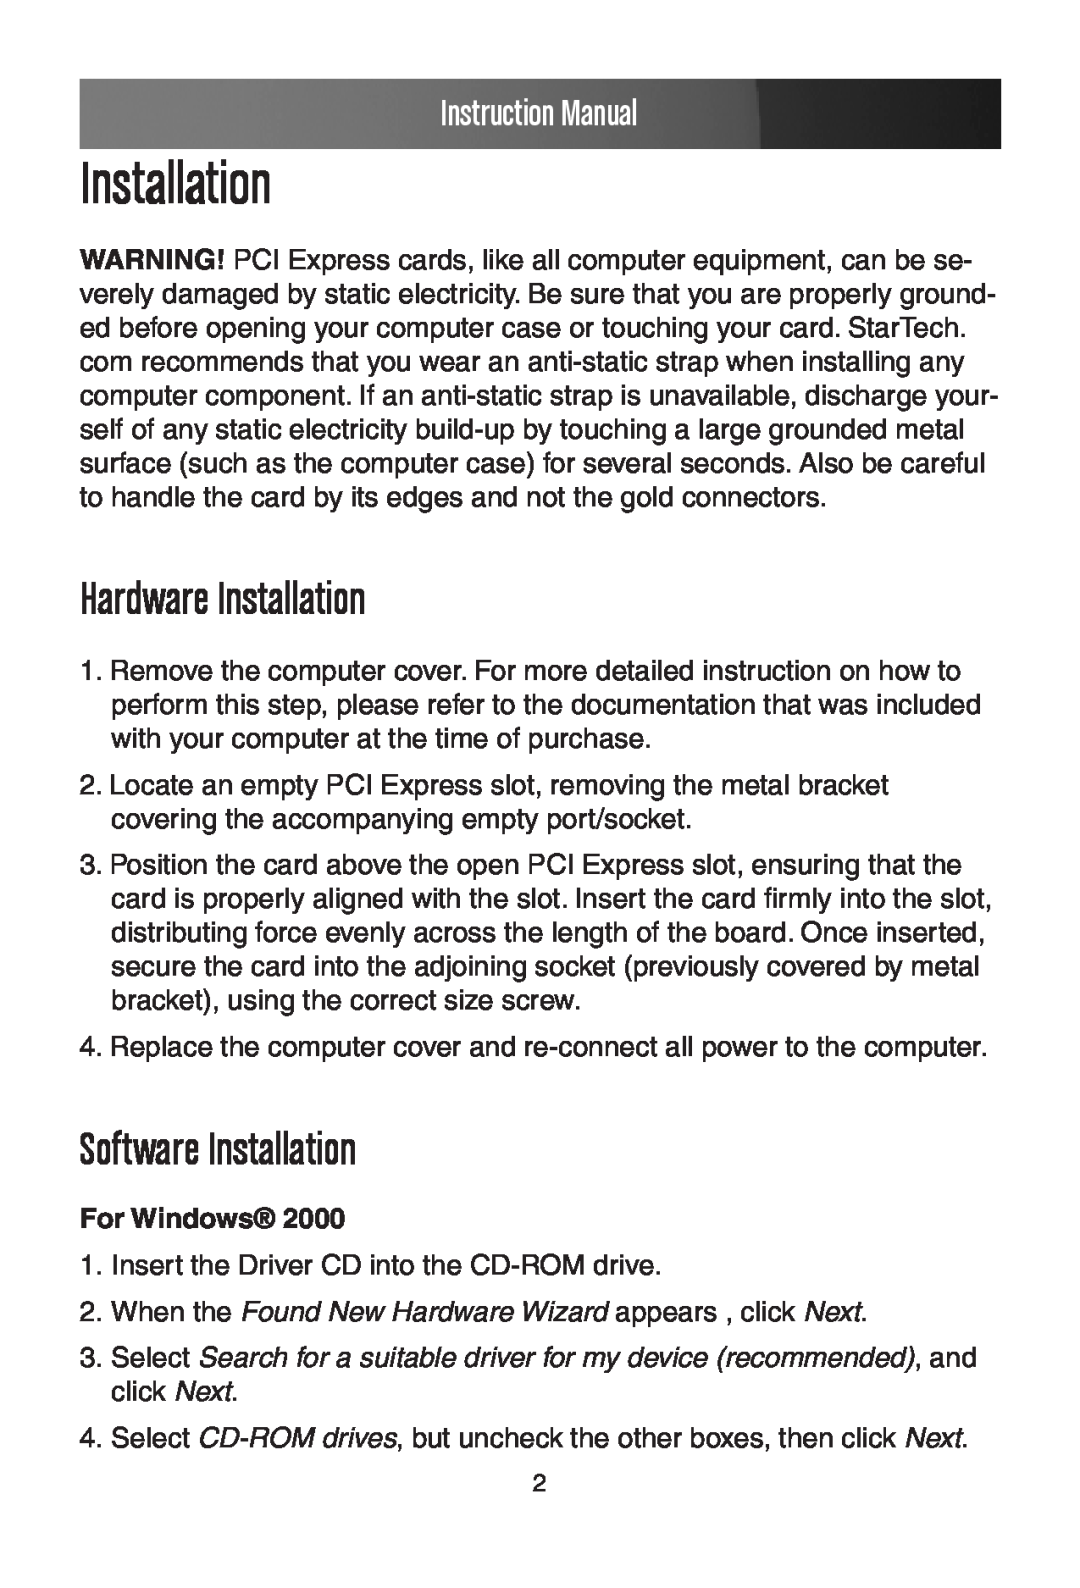 StarTech.com PEX1P instruction manual Hardware Installation, Software Installation, For Windows, Instruction Manual 